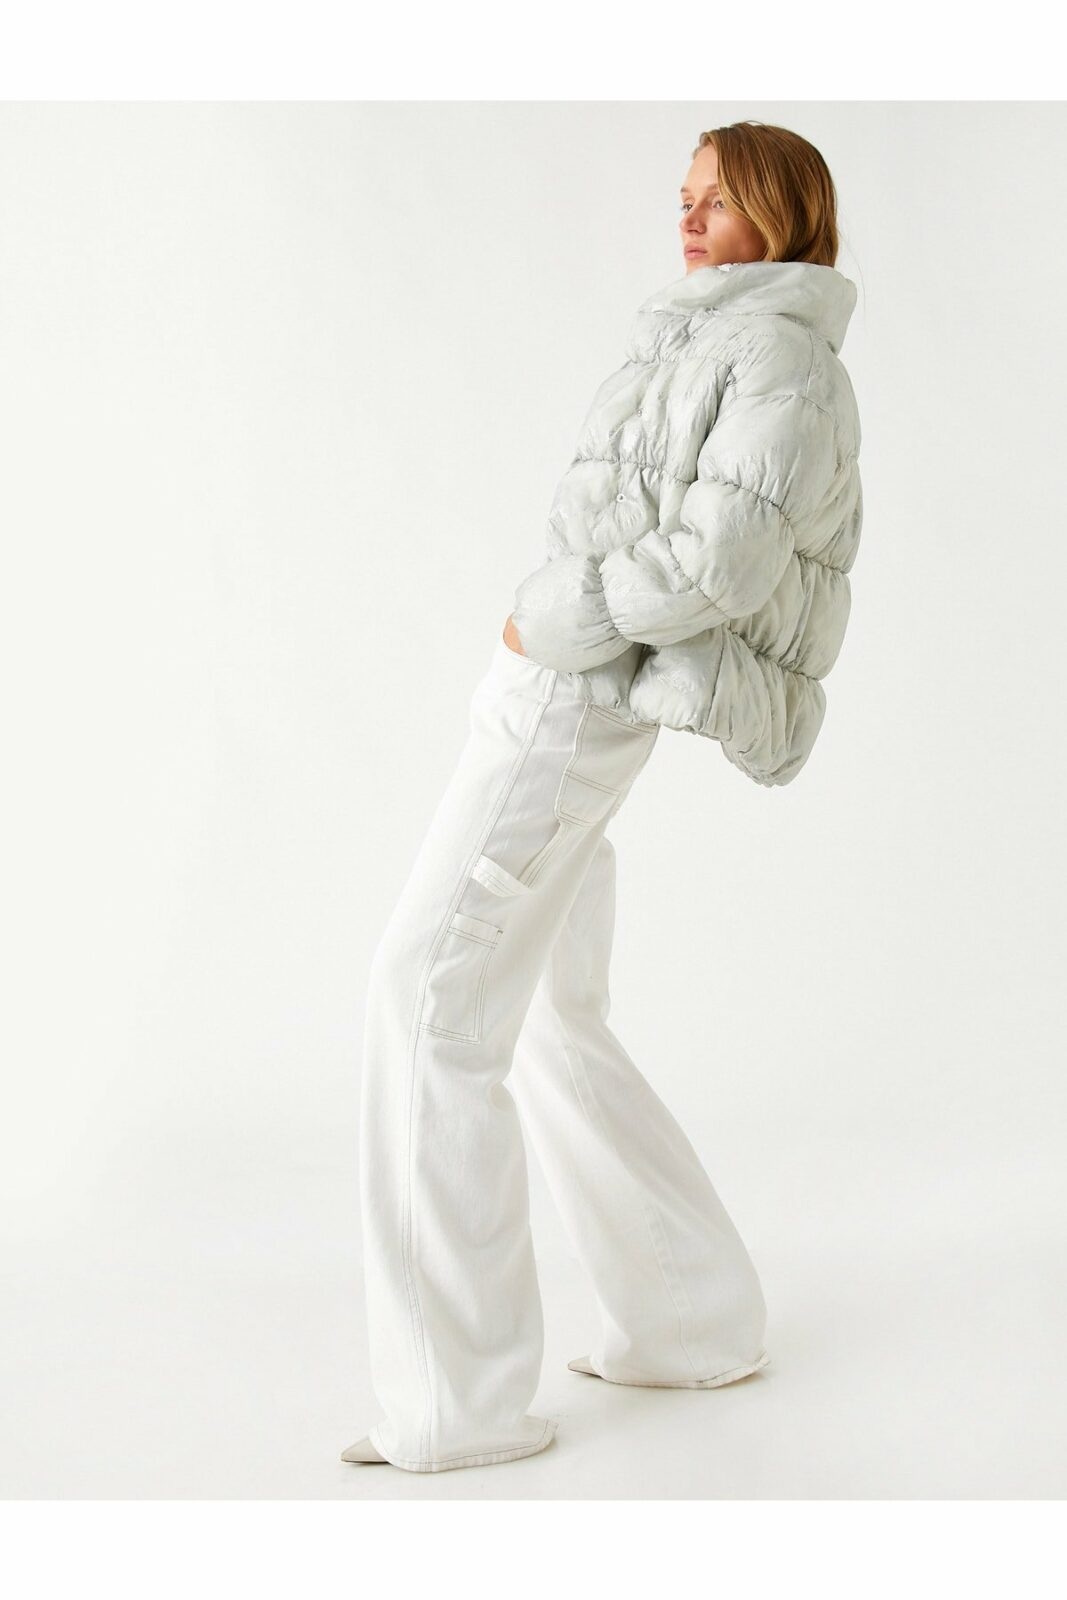 Koton Winter Jacket - Gray